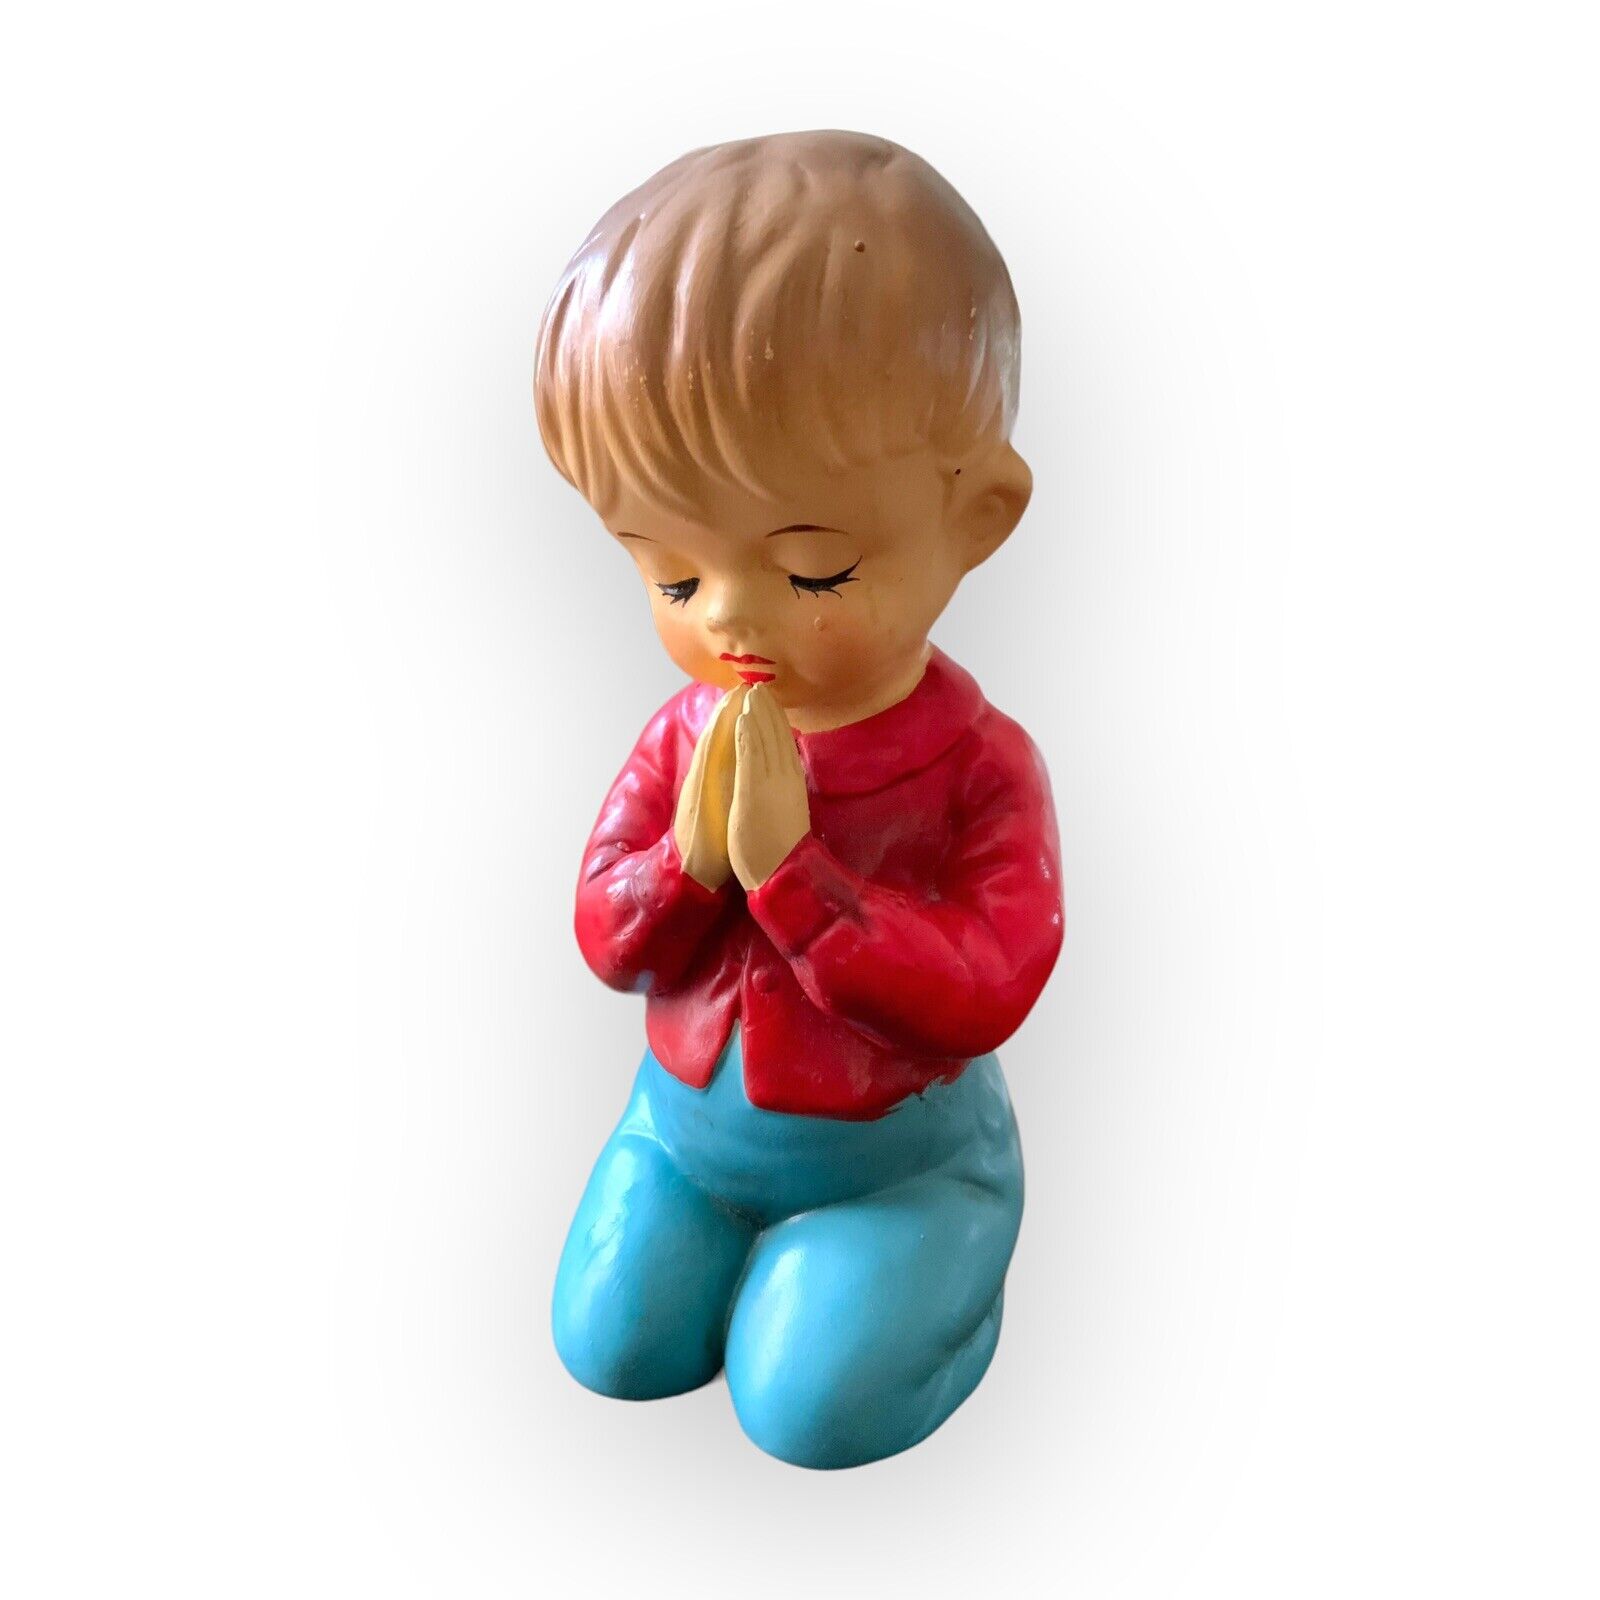 Vintage Norleans Praying Boy Figurine Japan 6.5” Ceramic Christian Nursery Decor